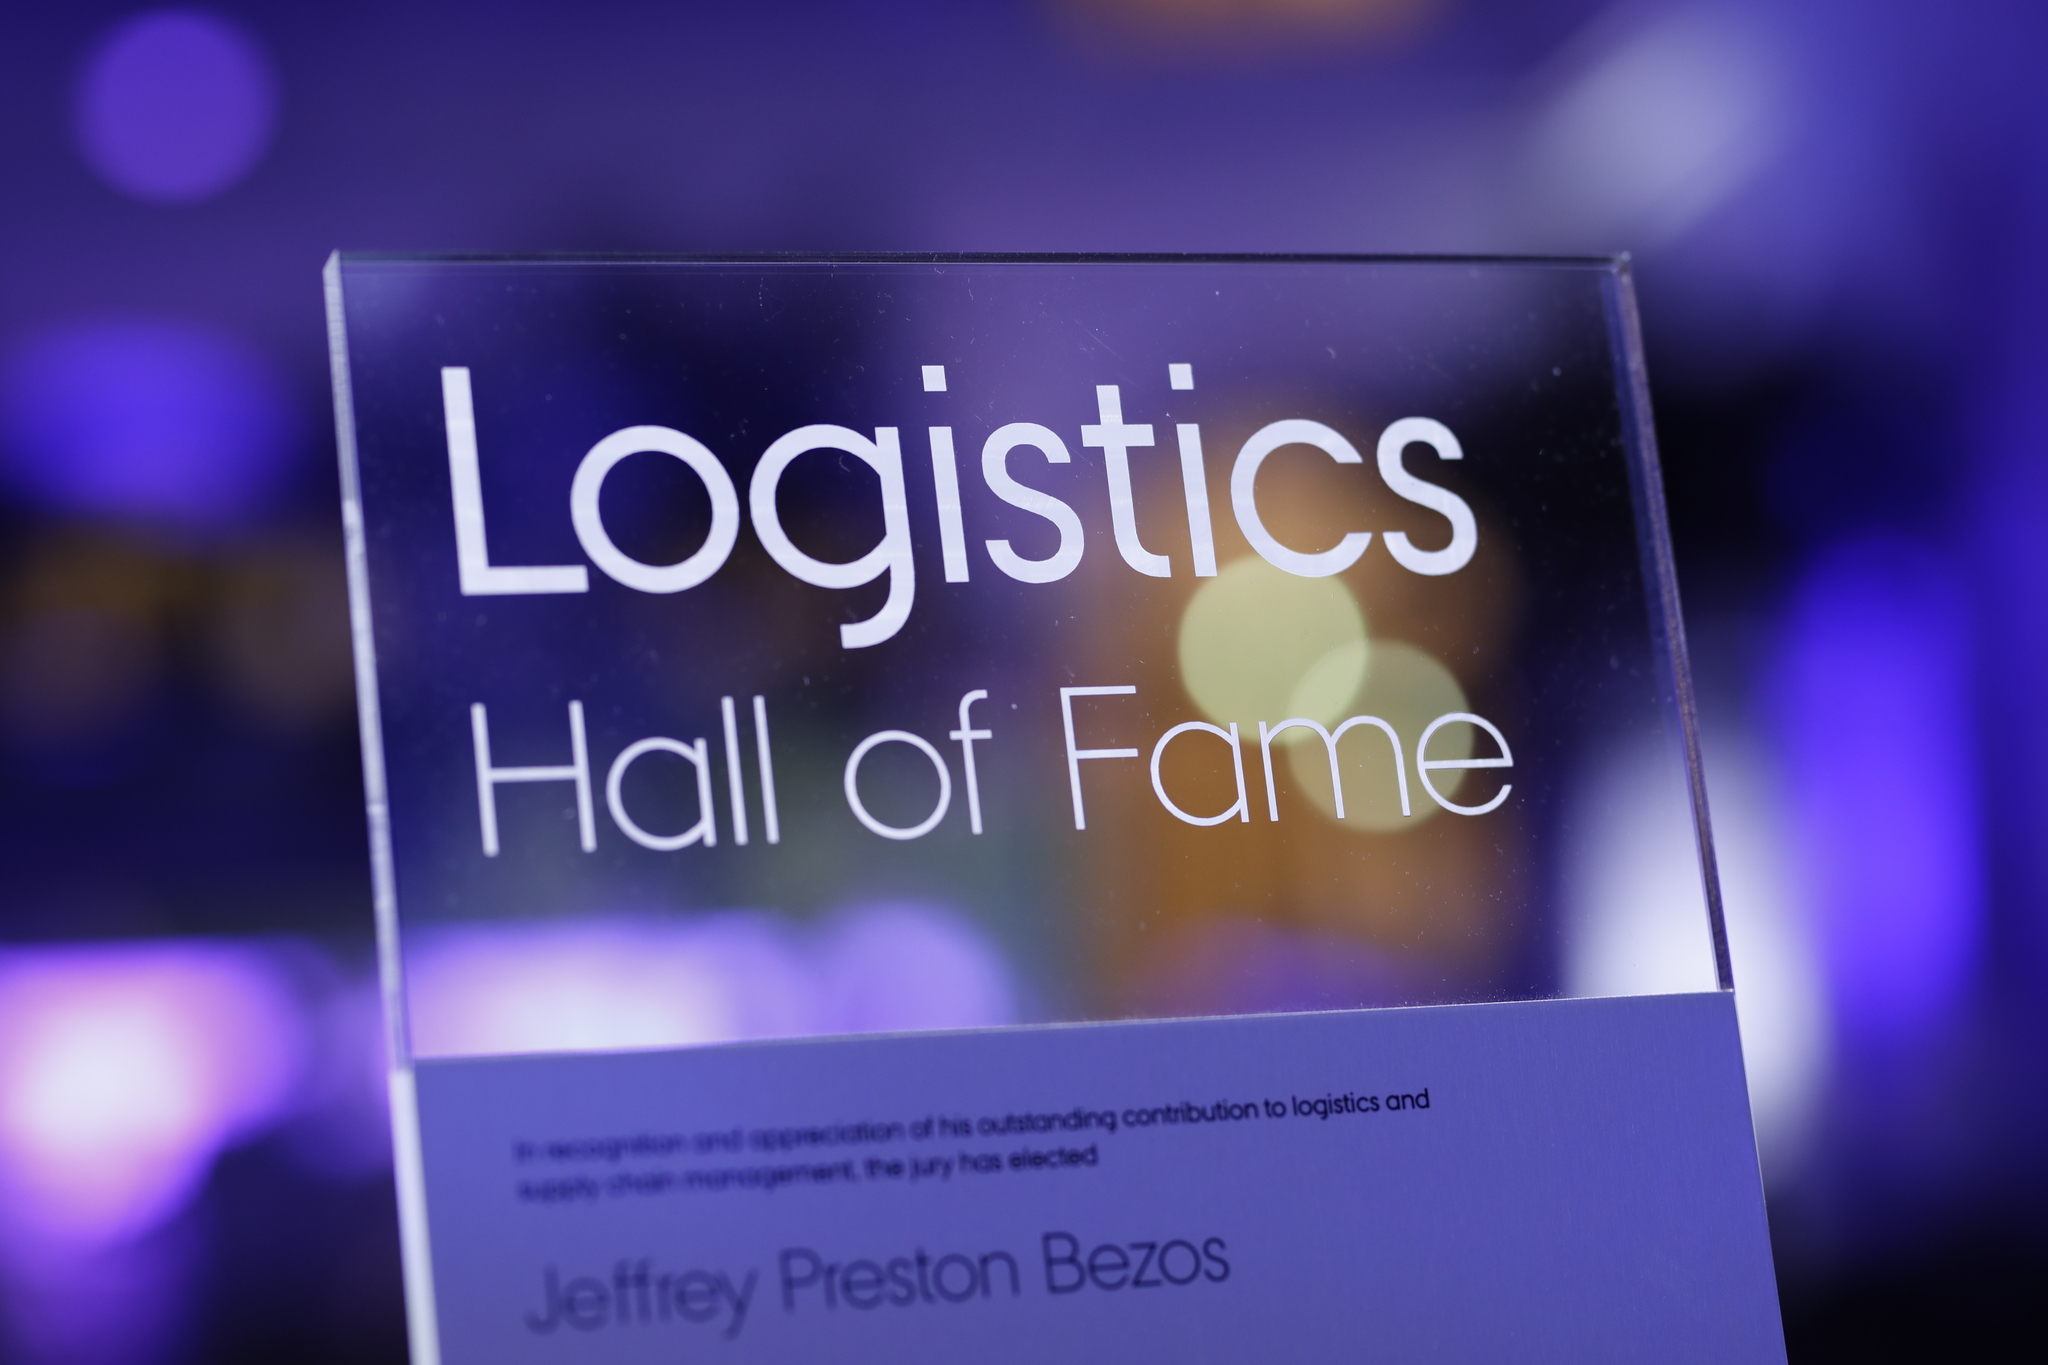 Logistics Hall of Fame